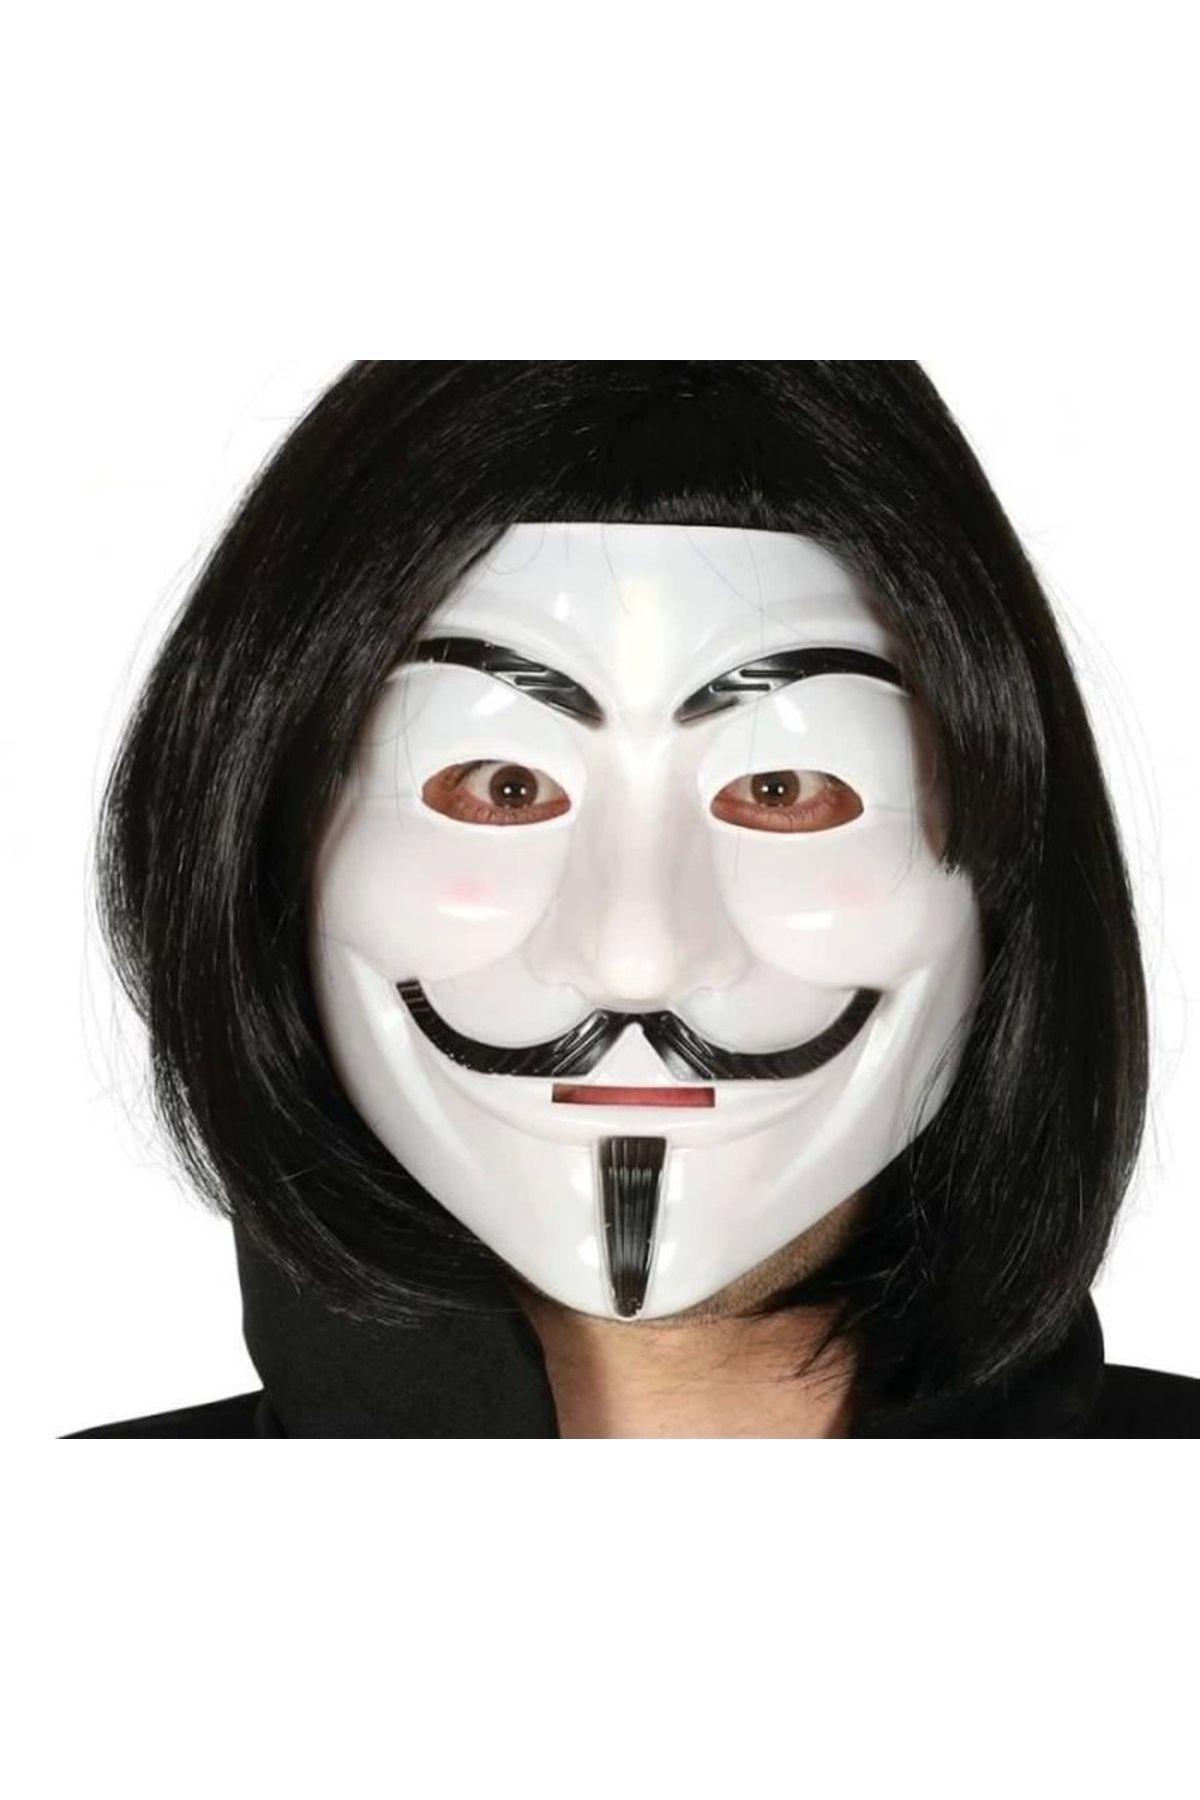 Skygo Siyah Renk Takma Kısa Saç ve V For Vendetta Maskesi Anonymous Maskesi